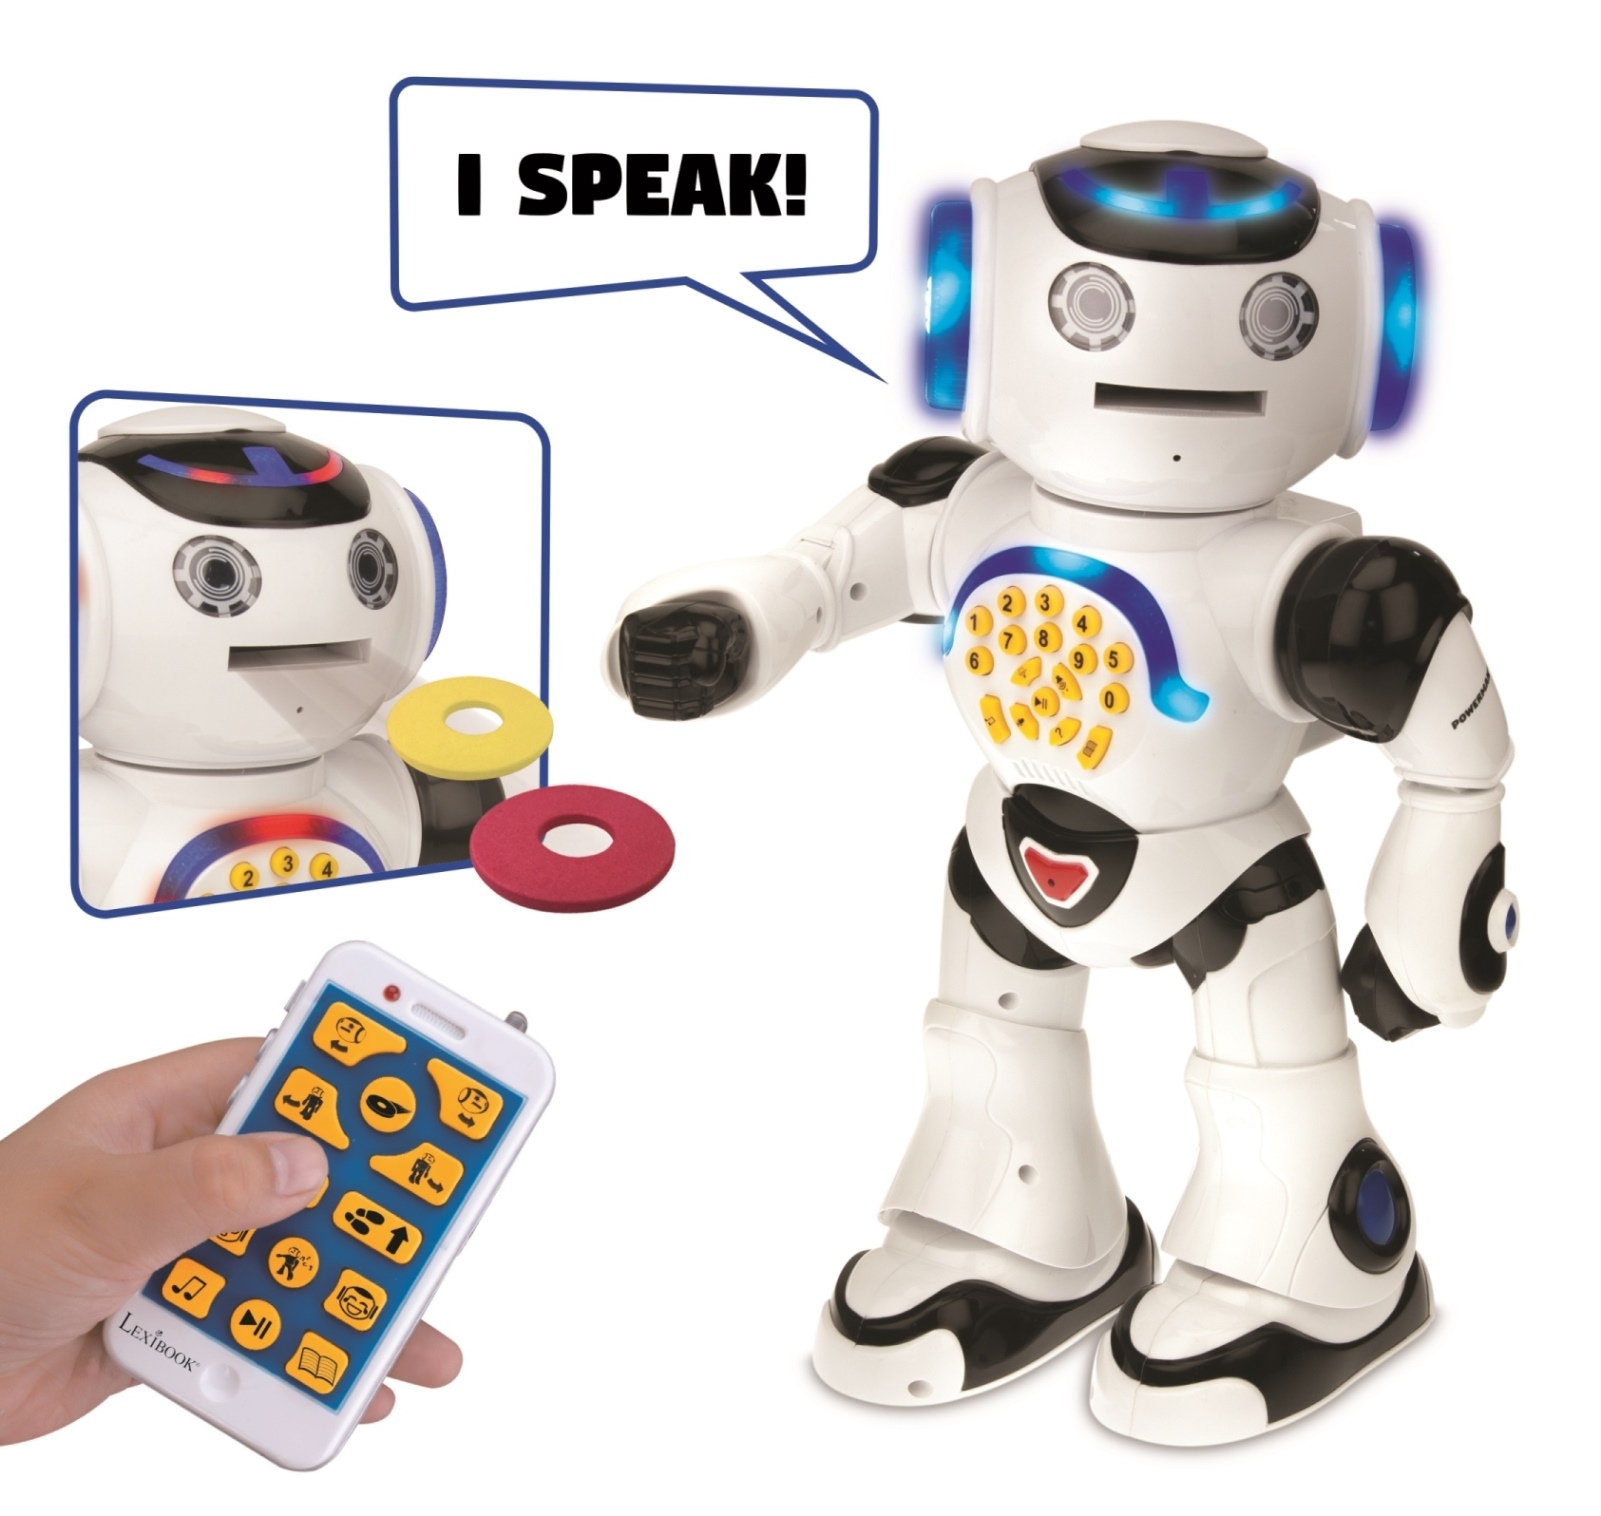 Lexibook POWERMAN Interactive Robot with Remote Control